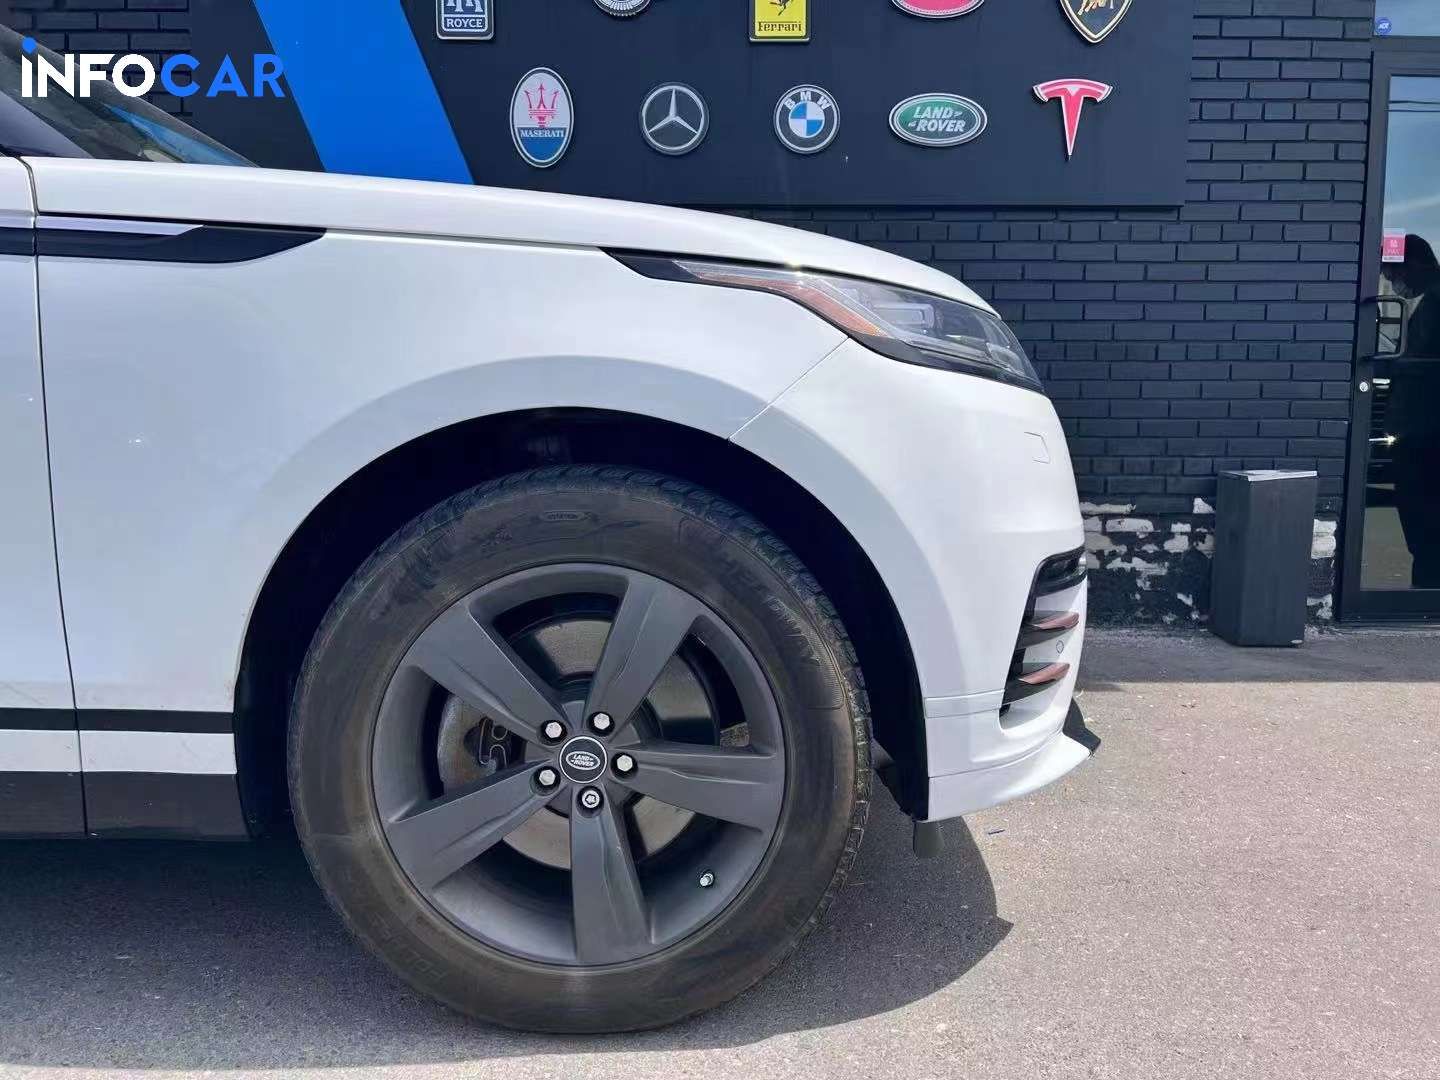 2019 Land Rover Range Rover Velar P300S - INFOCAR - Toronto Auto Trading Platform